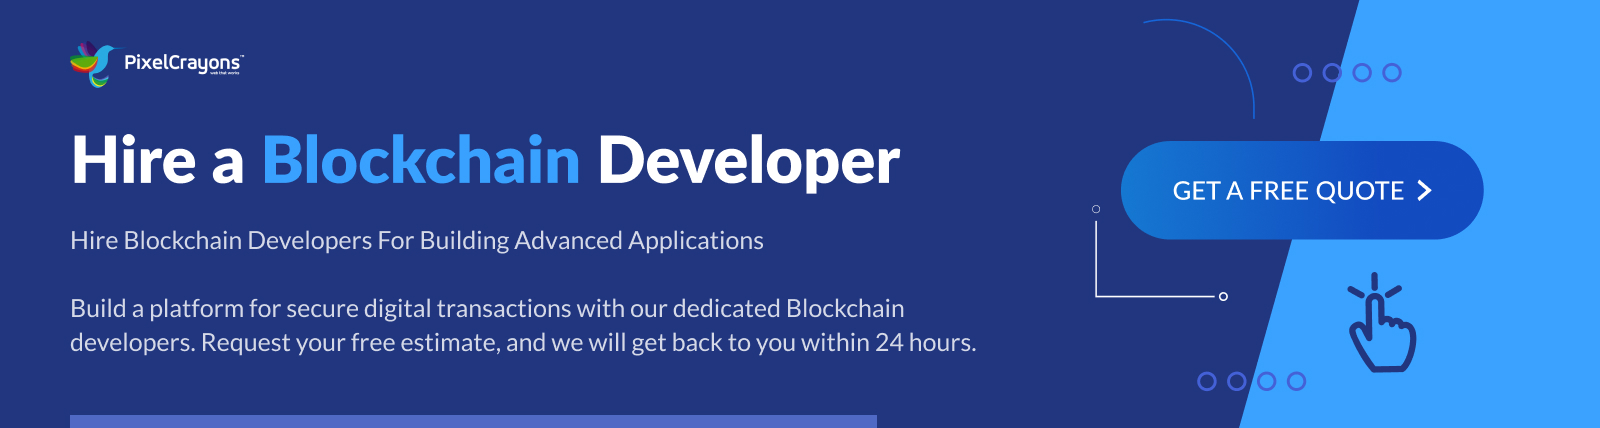 Blockchain Developer 1 1